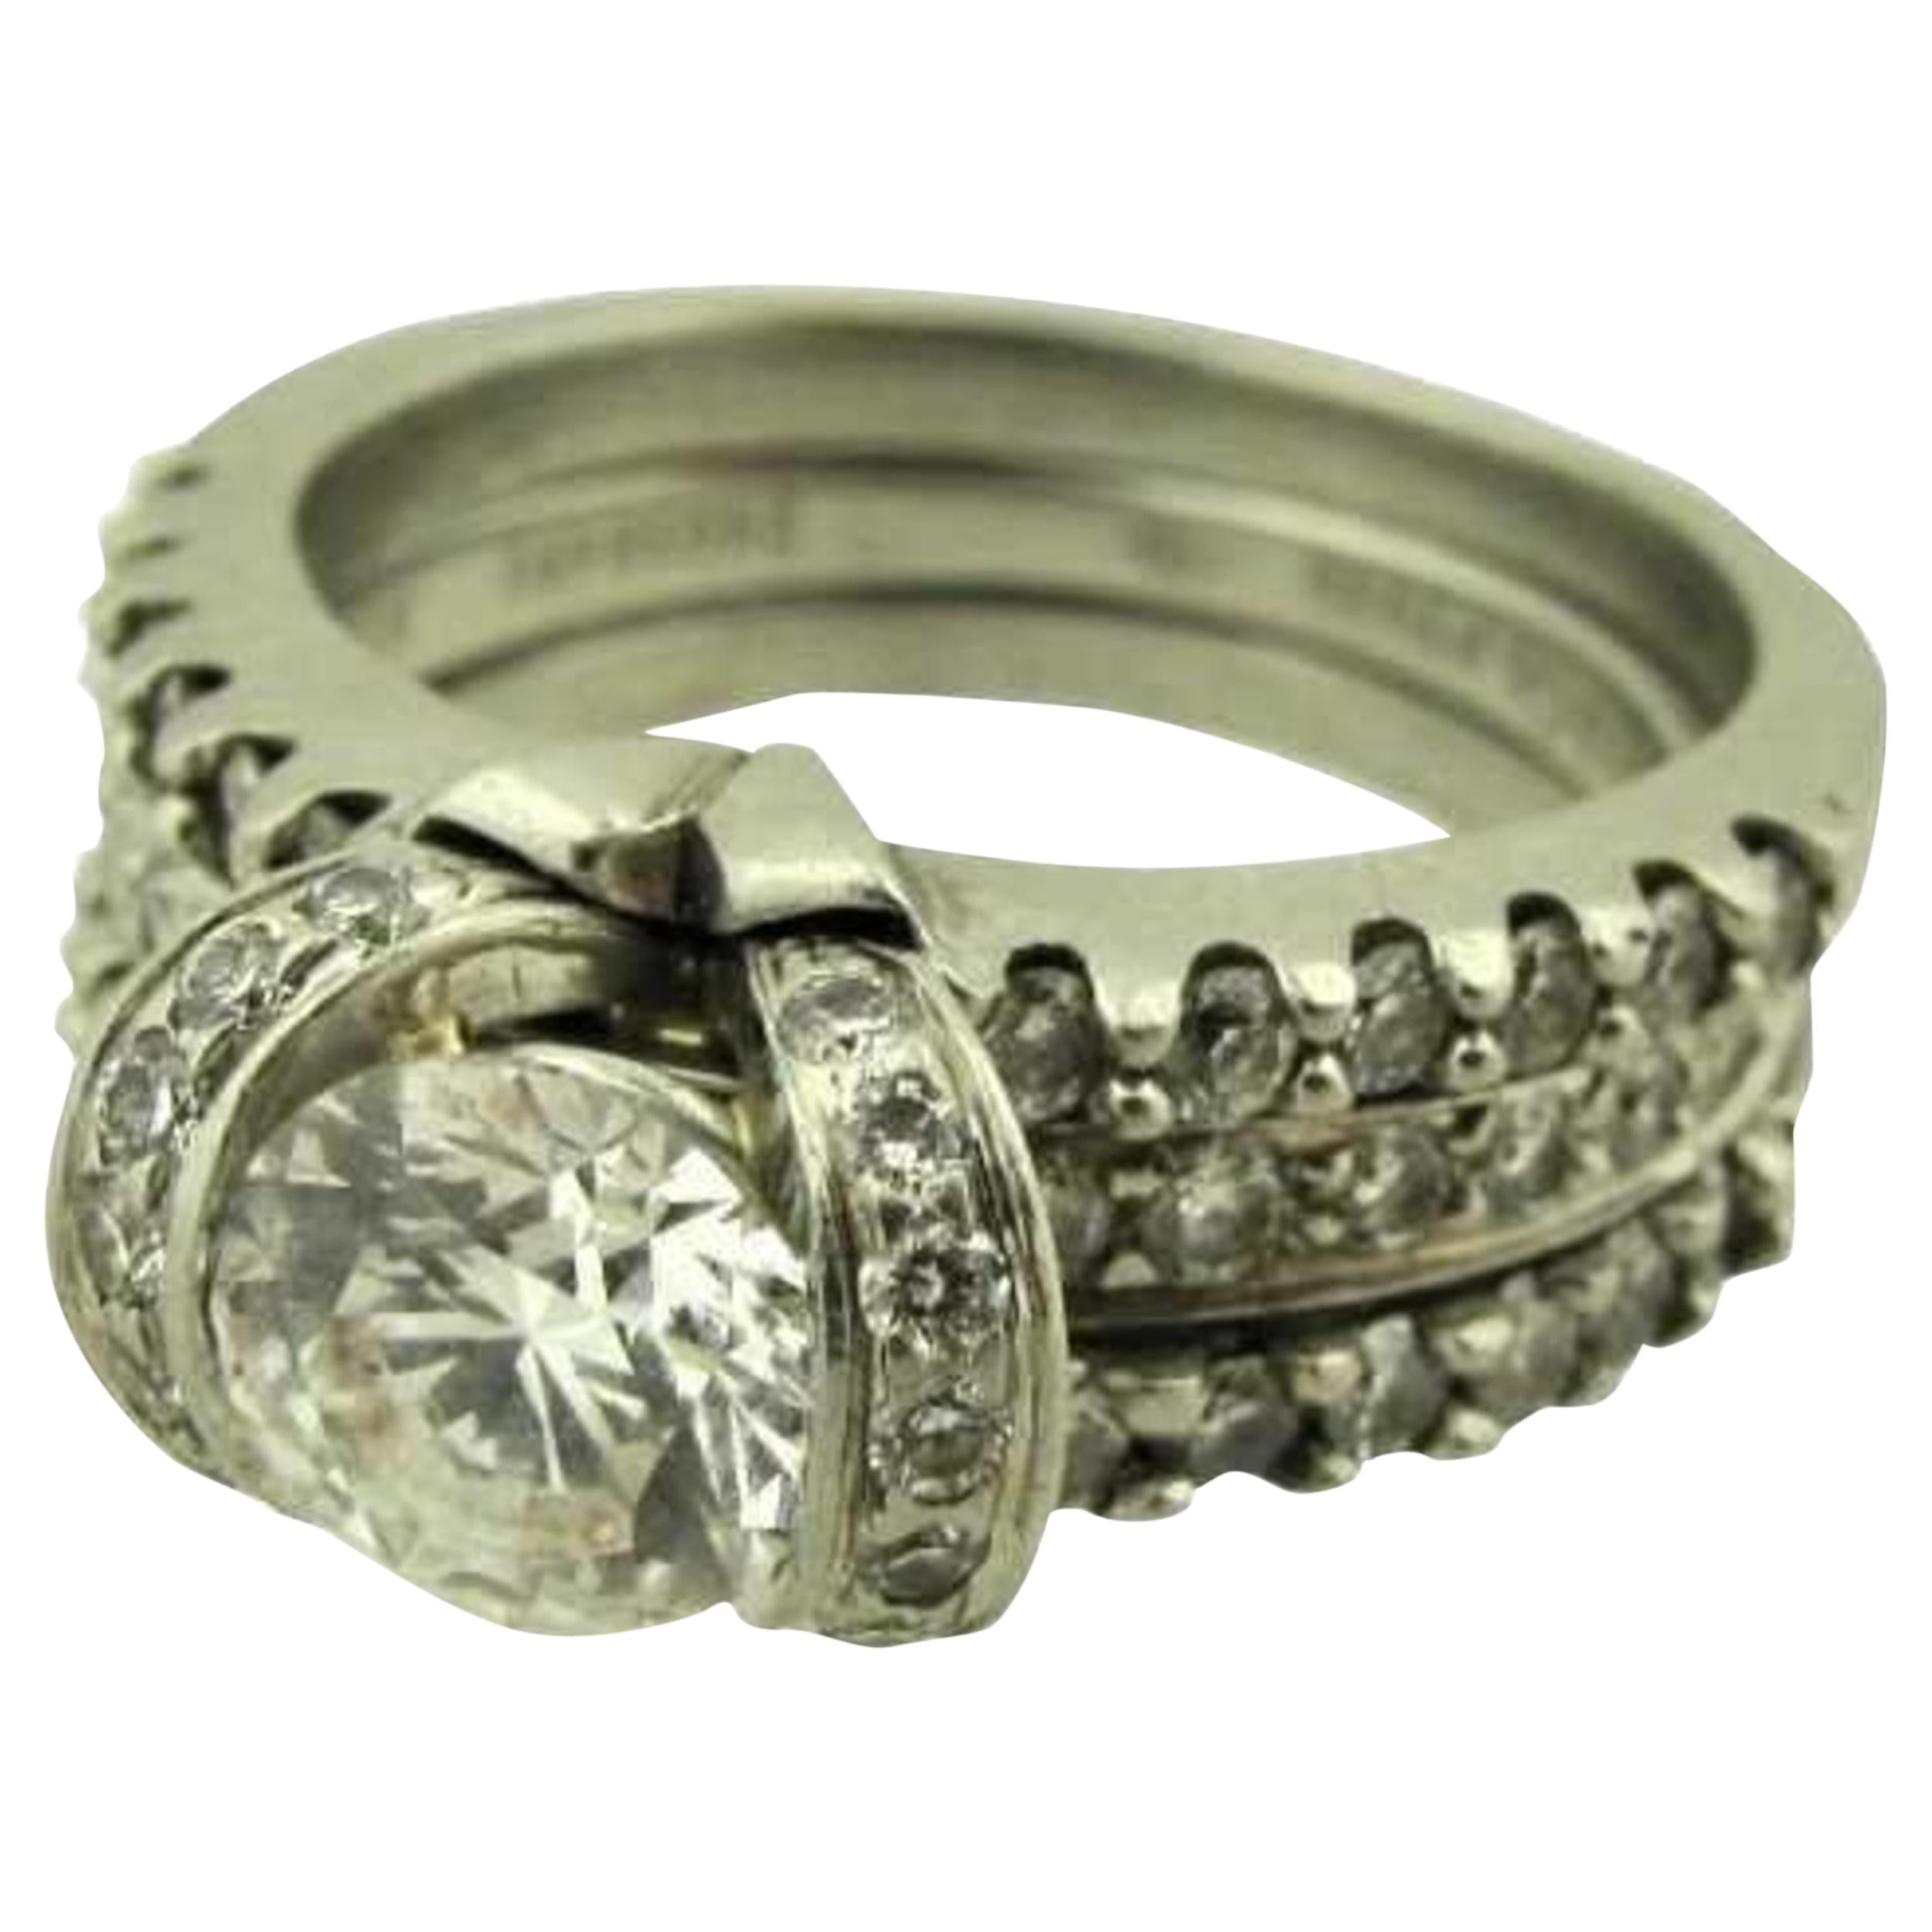 Elegant Platinum and Diamond Bow Ribbon Ring by Tiffany & Co